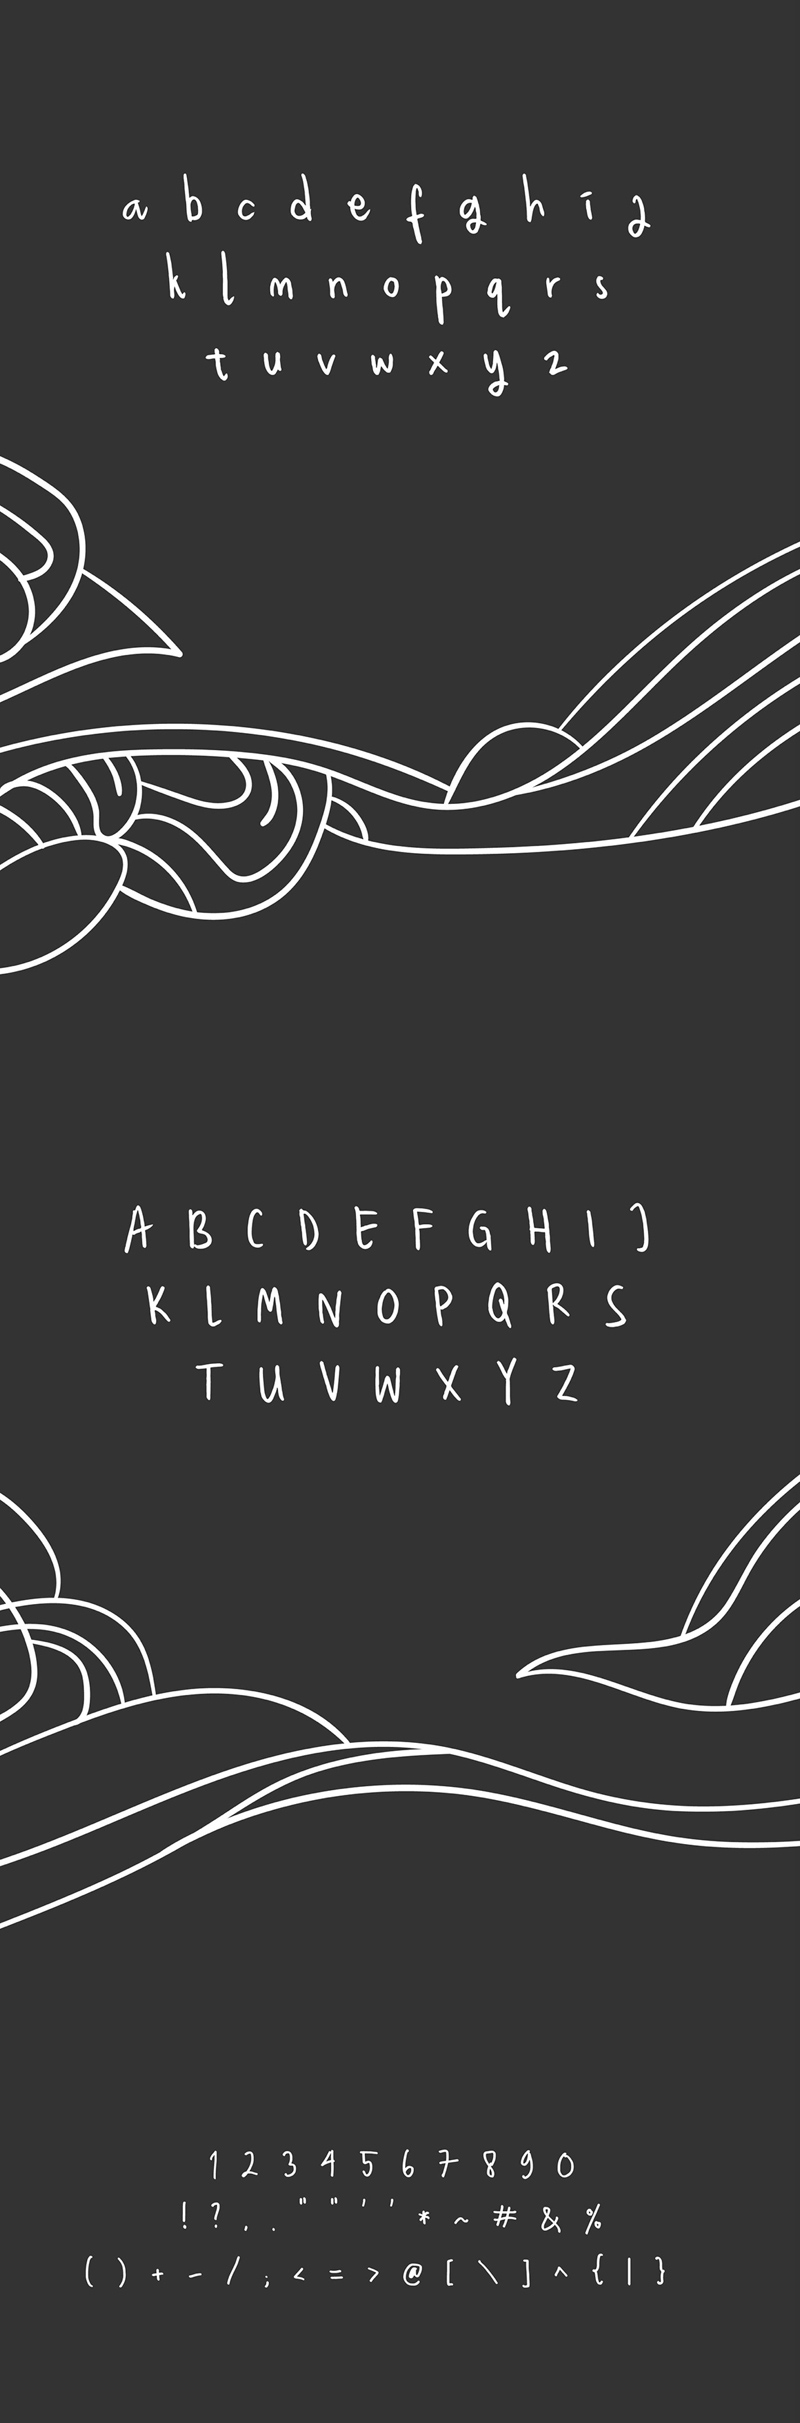 Weslona Font – Handmade Script Typeface